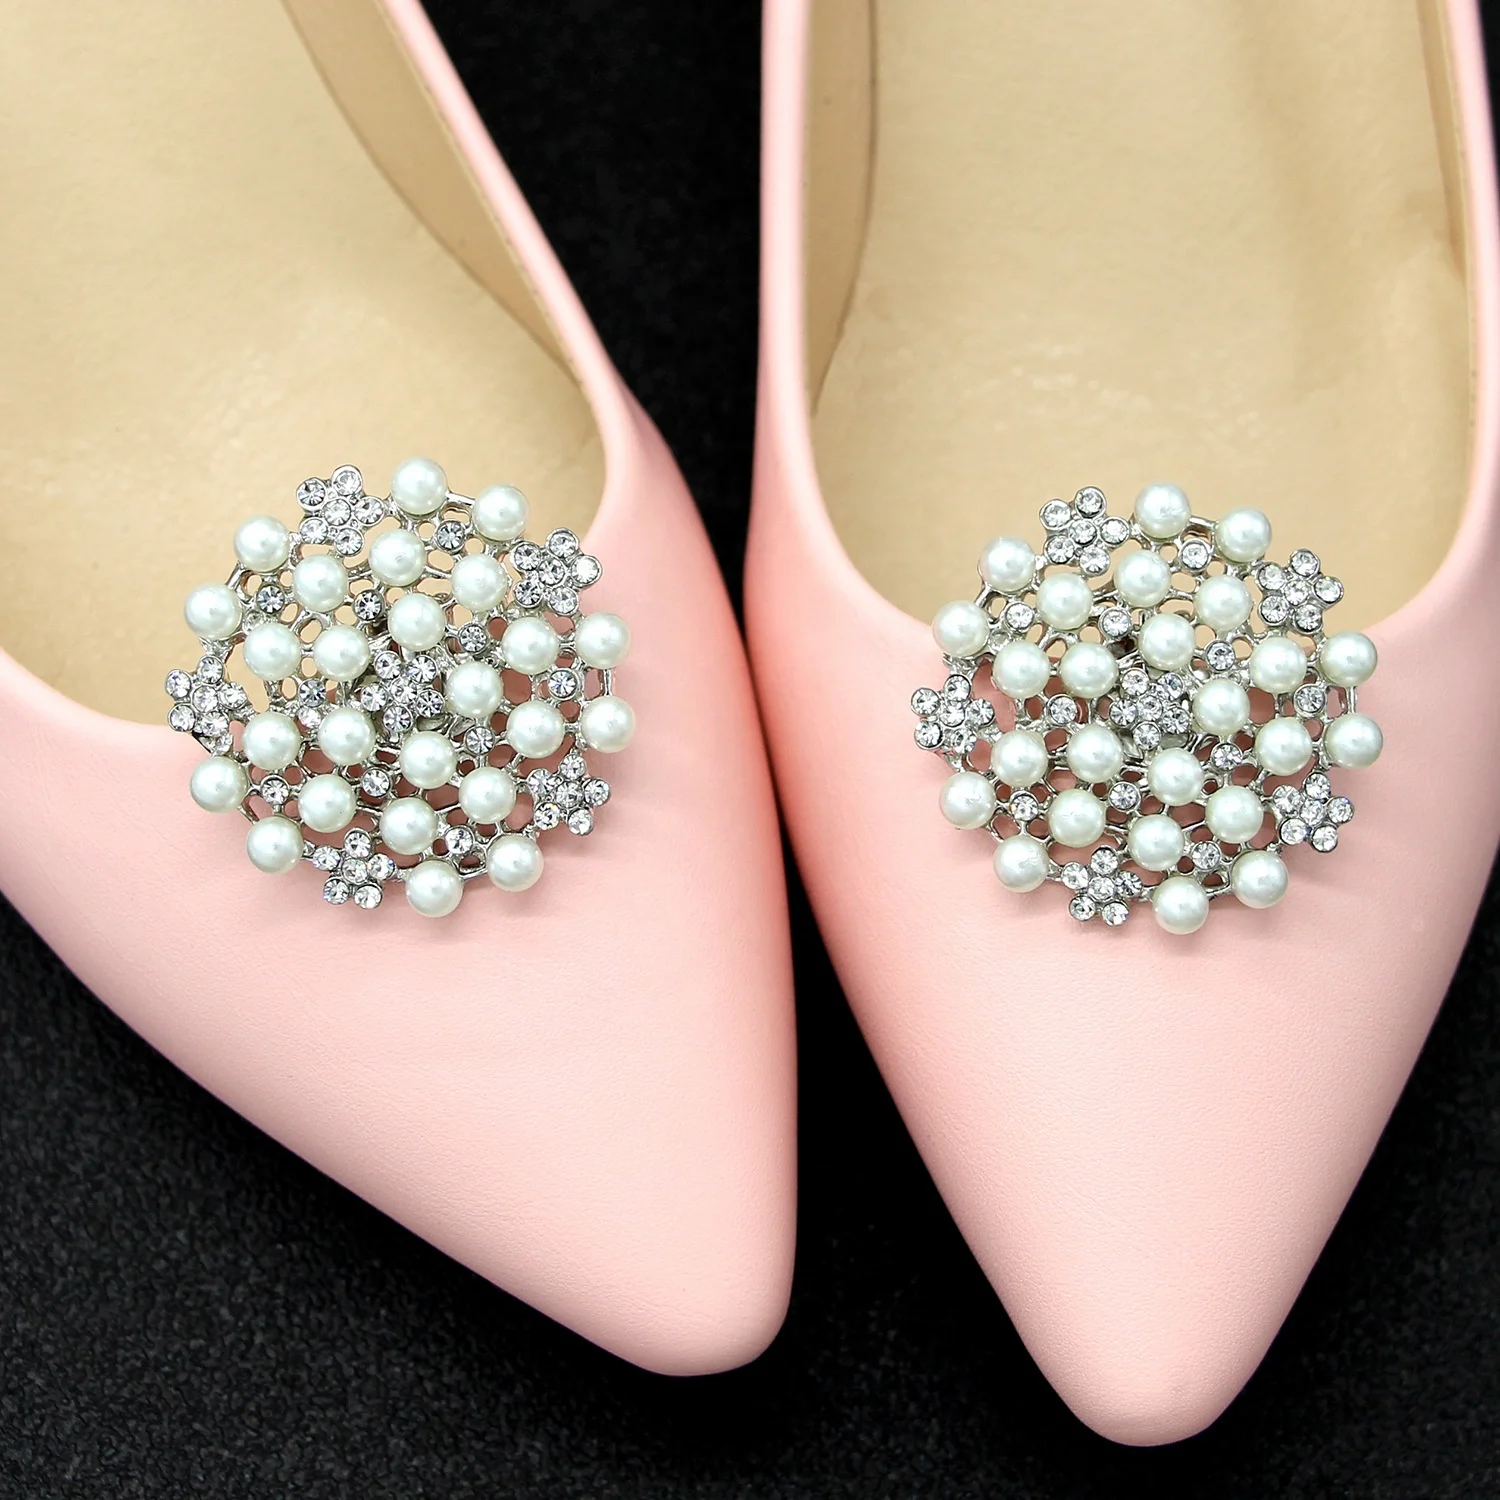 

XILIANGFEIZI Unique Pearl Crystal Shoe Charms Metal Bling High Heel Wedding Accessories Rhinestone Buckle Shoe Flower Buckles